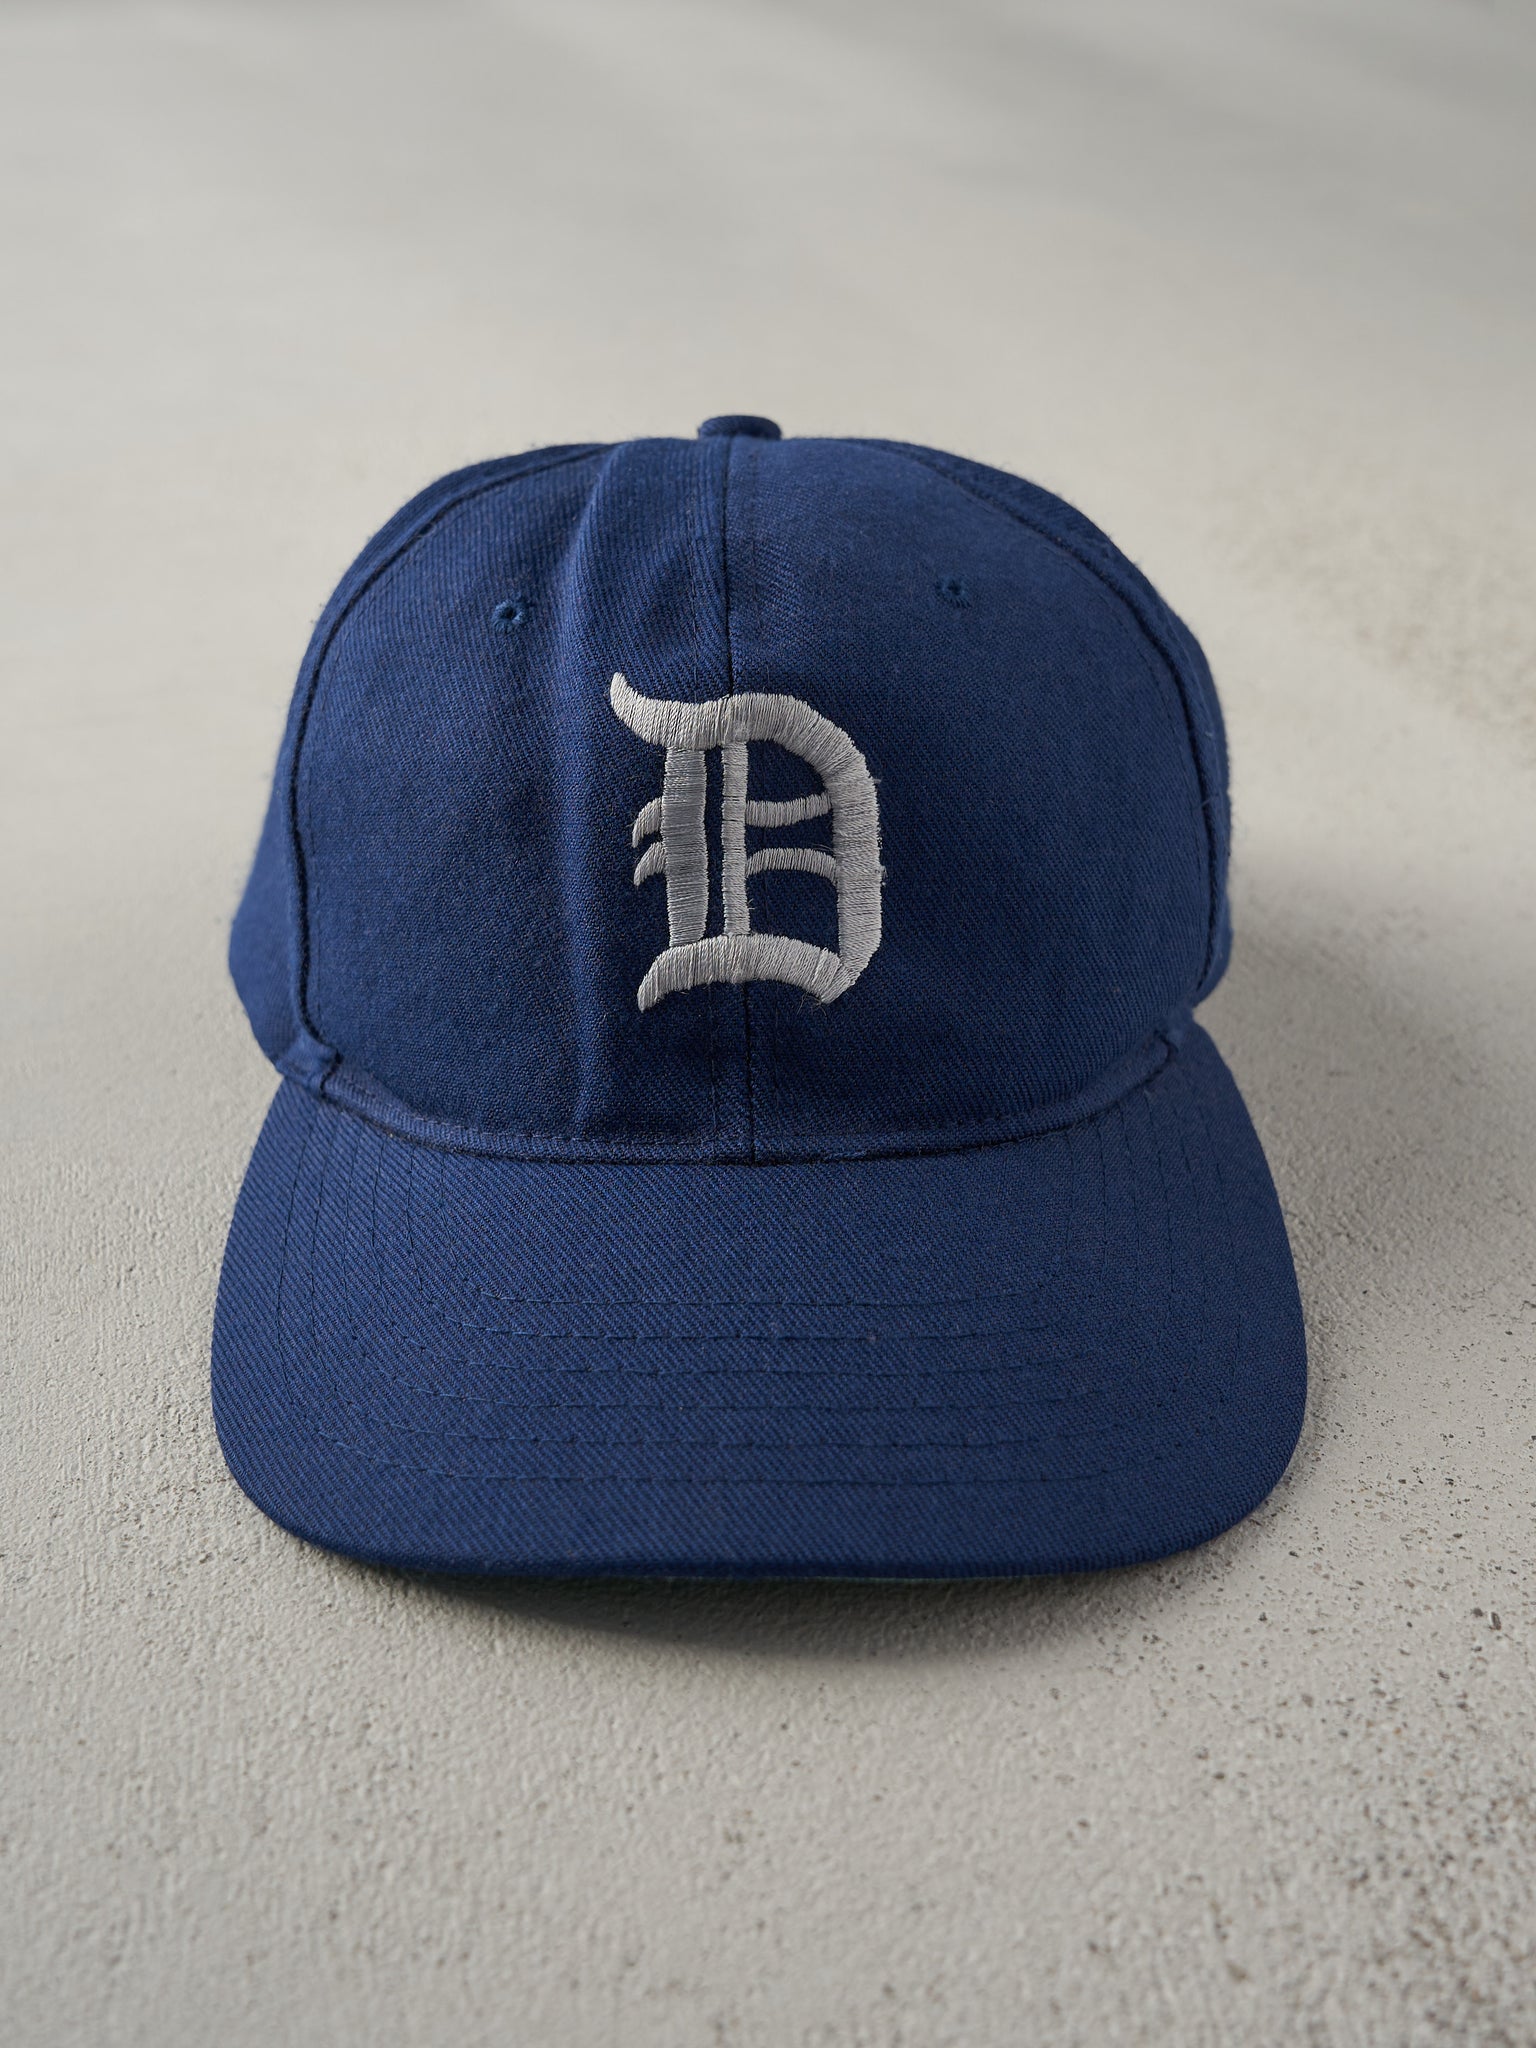 Vintage 80s Navy Blue Detroit Tigers Embroidered Snapback Hat